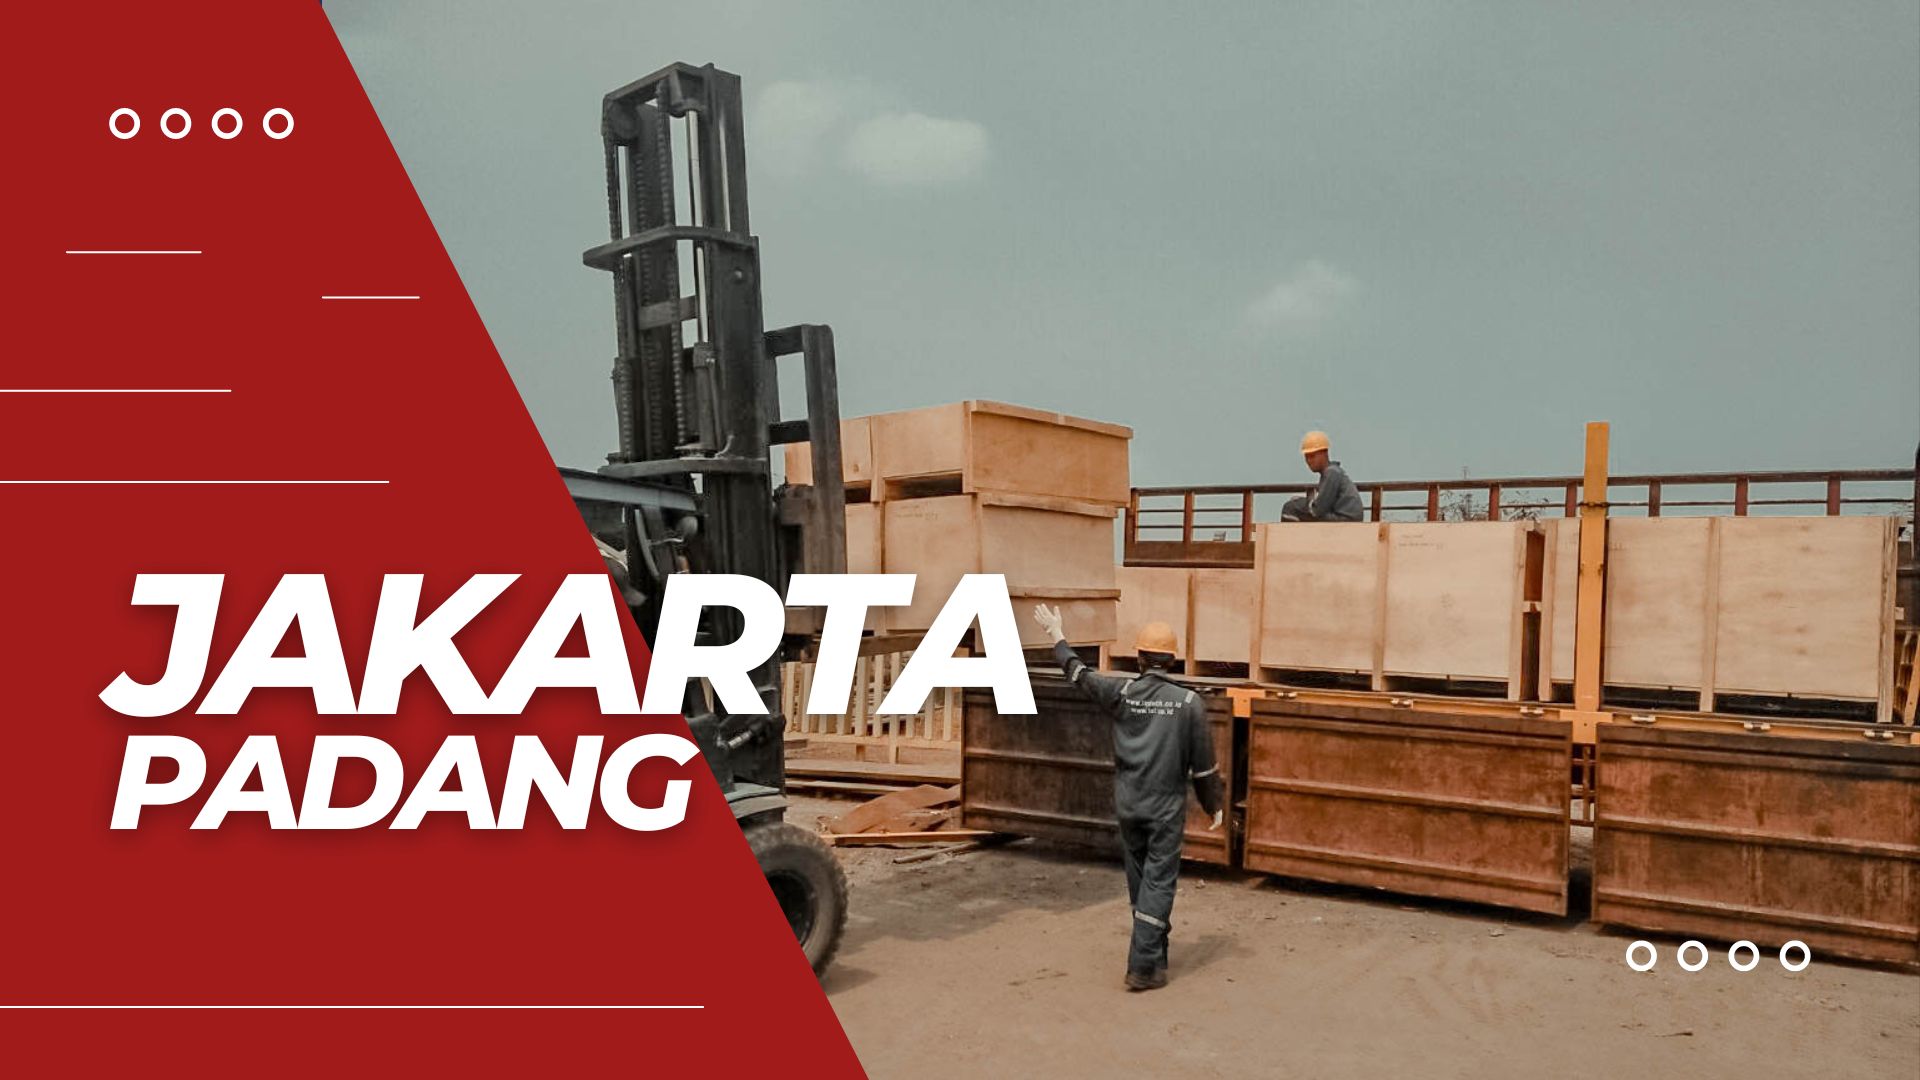 Ekspedisi Container Jakarta Padang